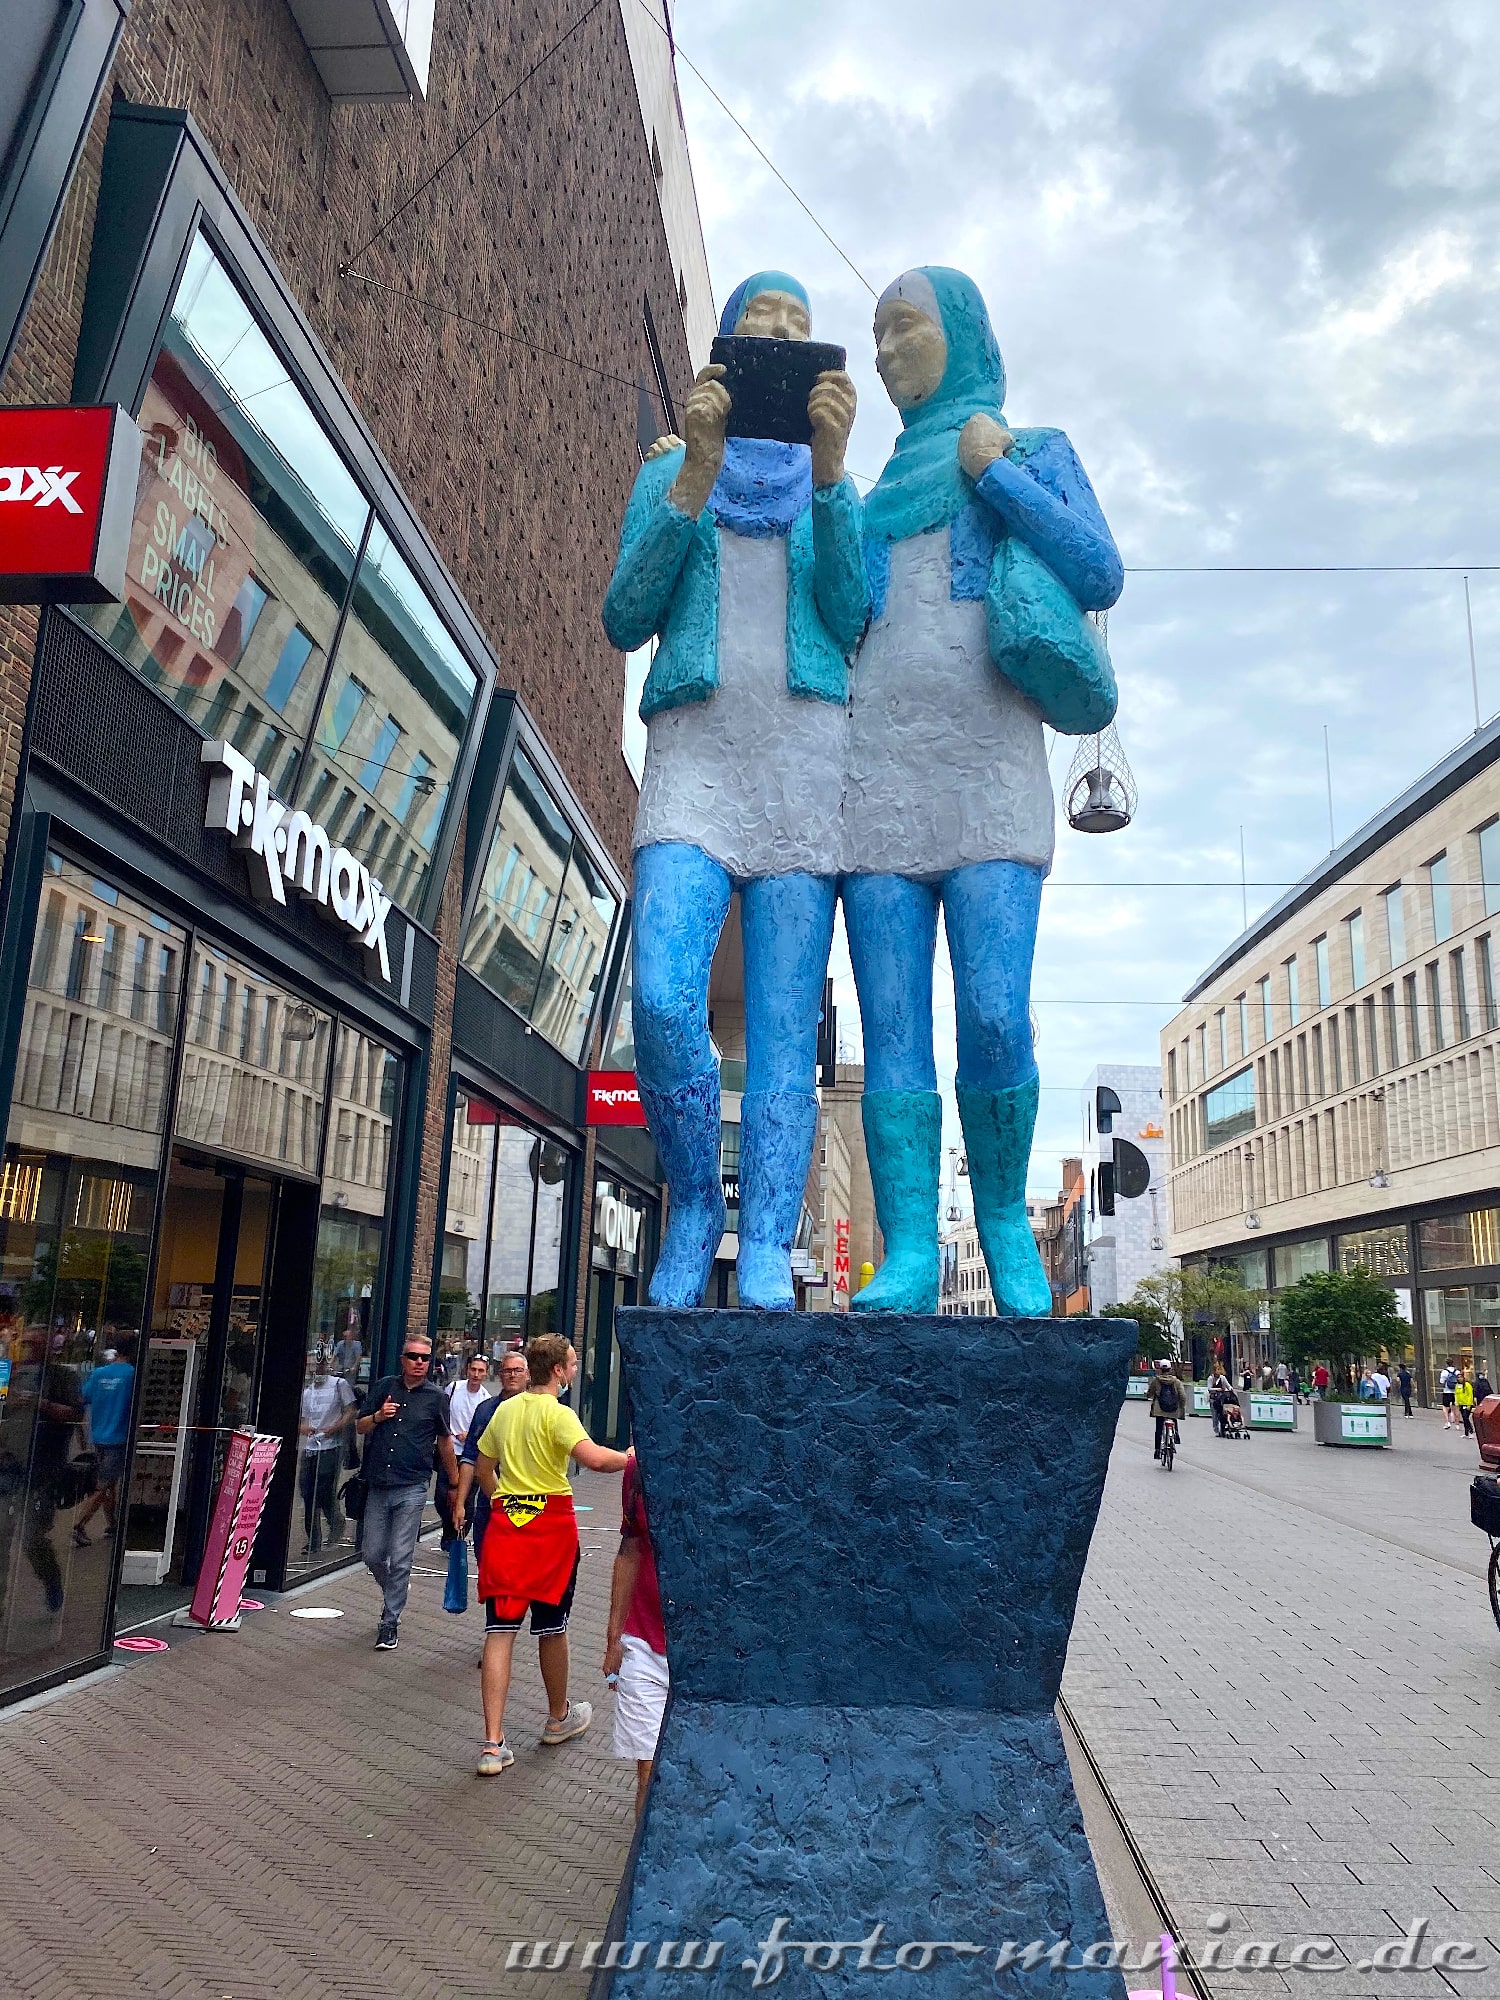 Skulptur zweier Mädchen in Den Haags Zentrum